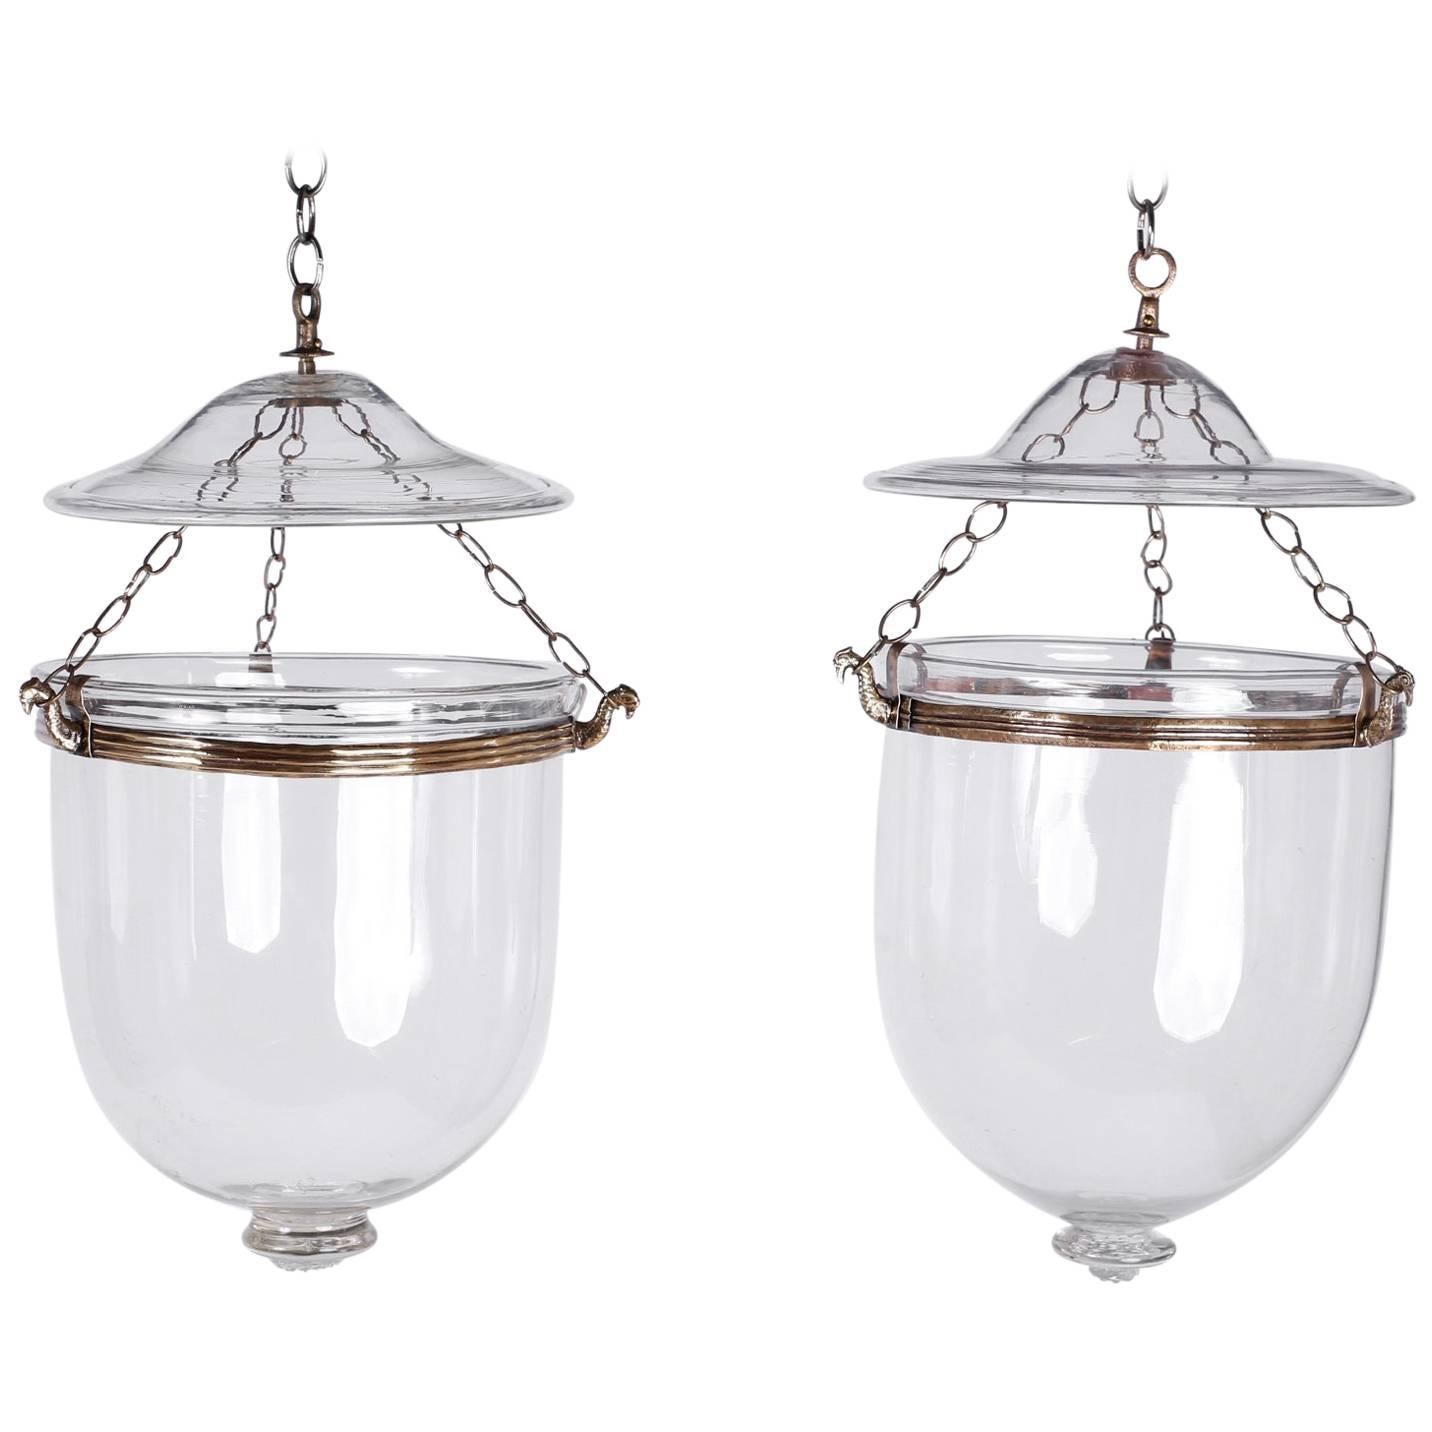 Pair of 19th Century Bell Jar Lanterns or Lights